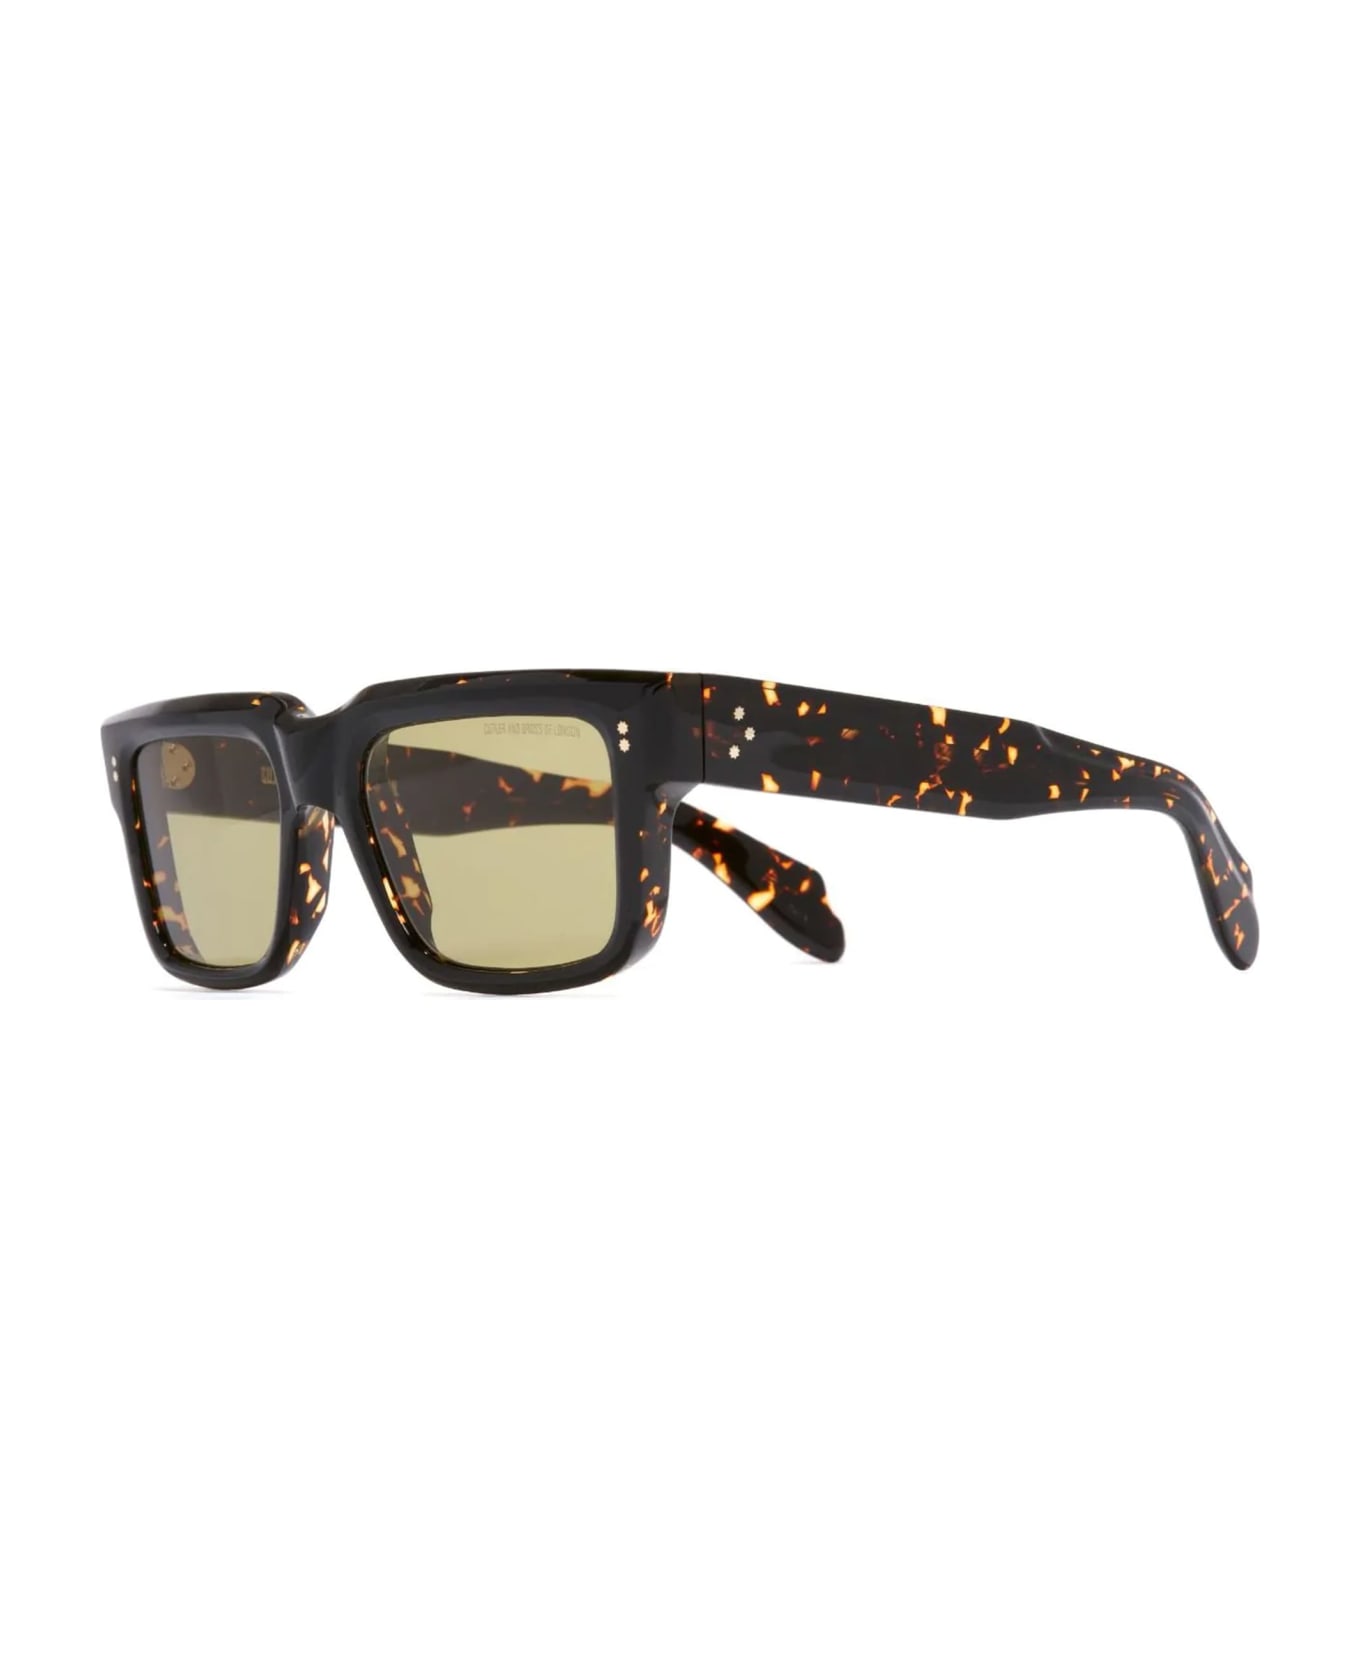 Cutler and Gross 1403 / Havana Sunglasses - Black